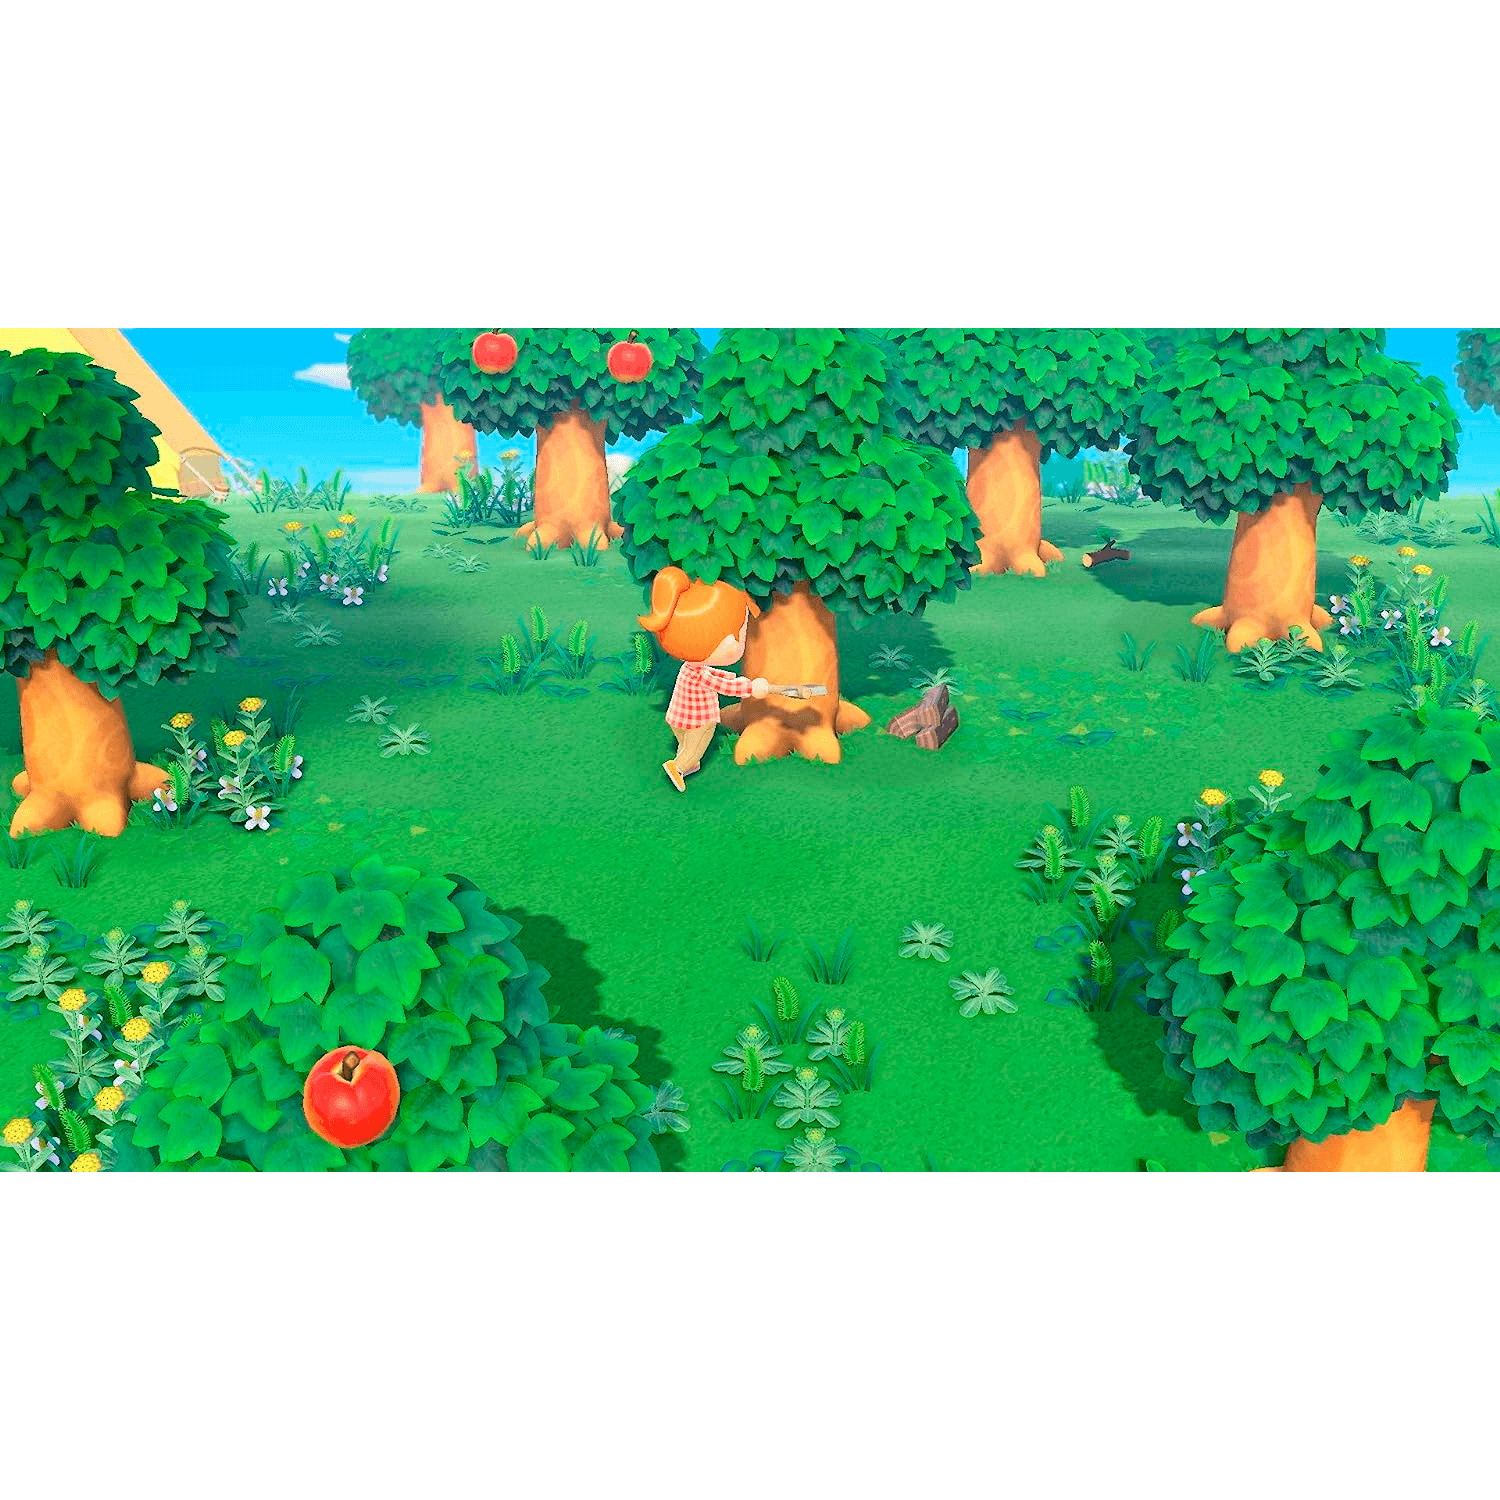 Jogo Animal Crossing: New Horizons para Nintendo Switch